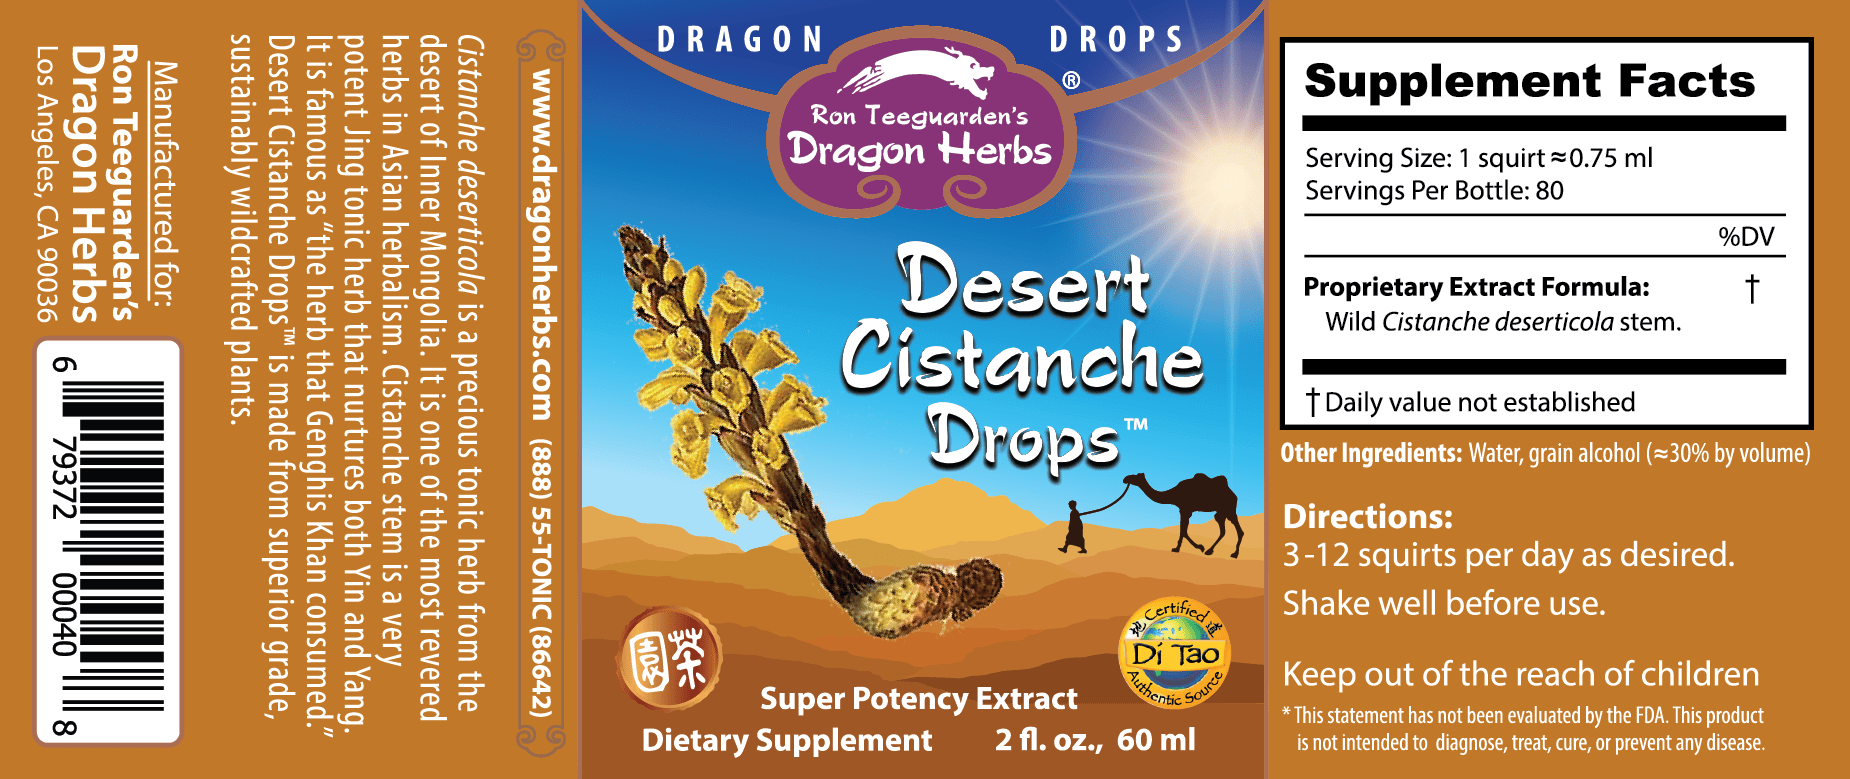 Desert Cistanche Drops Label - Dragon Herbs